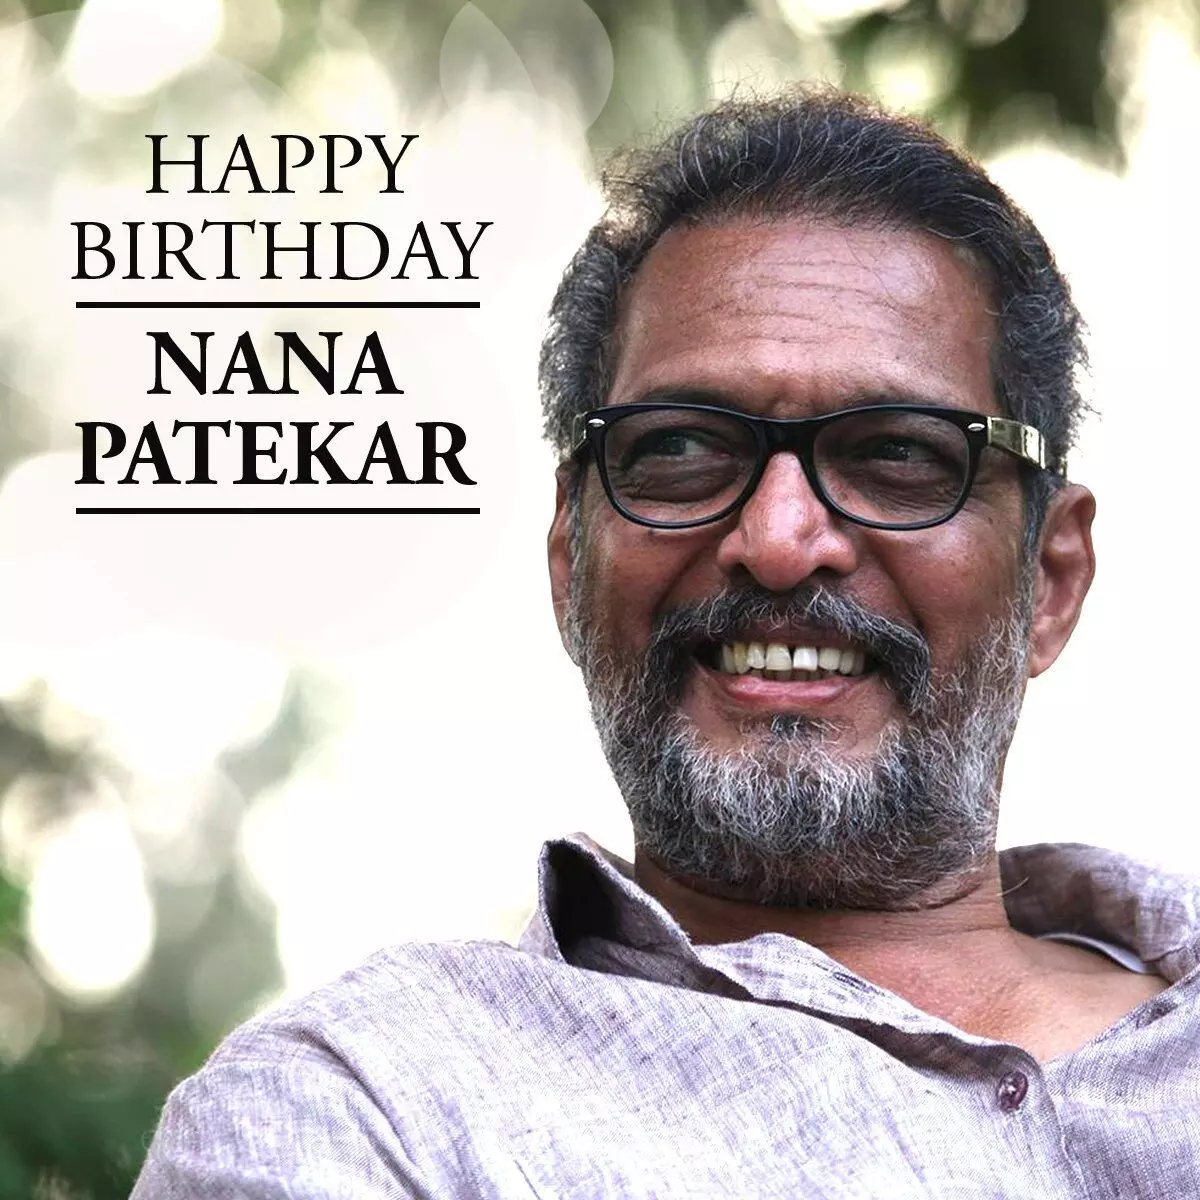 Happy Birthday to Nana Patekar: Versatile Actor with many Award-Winning Performances